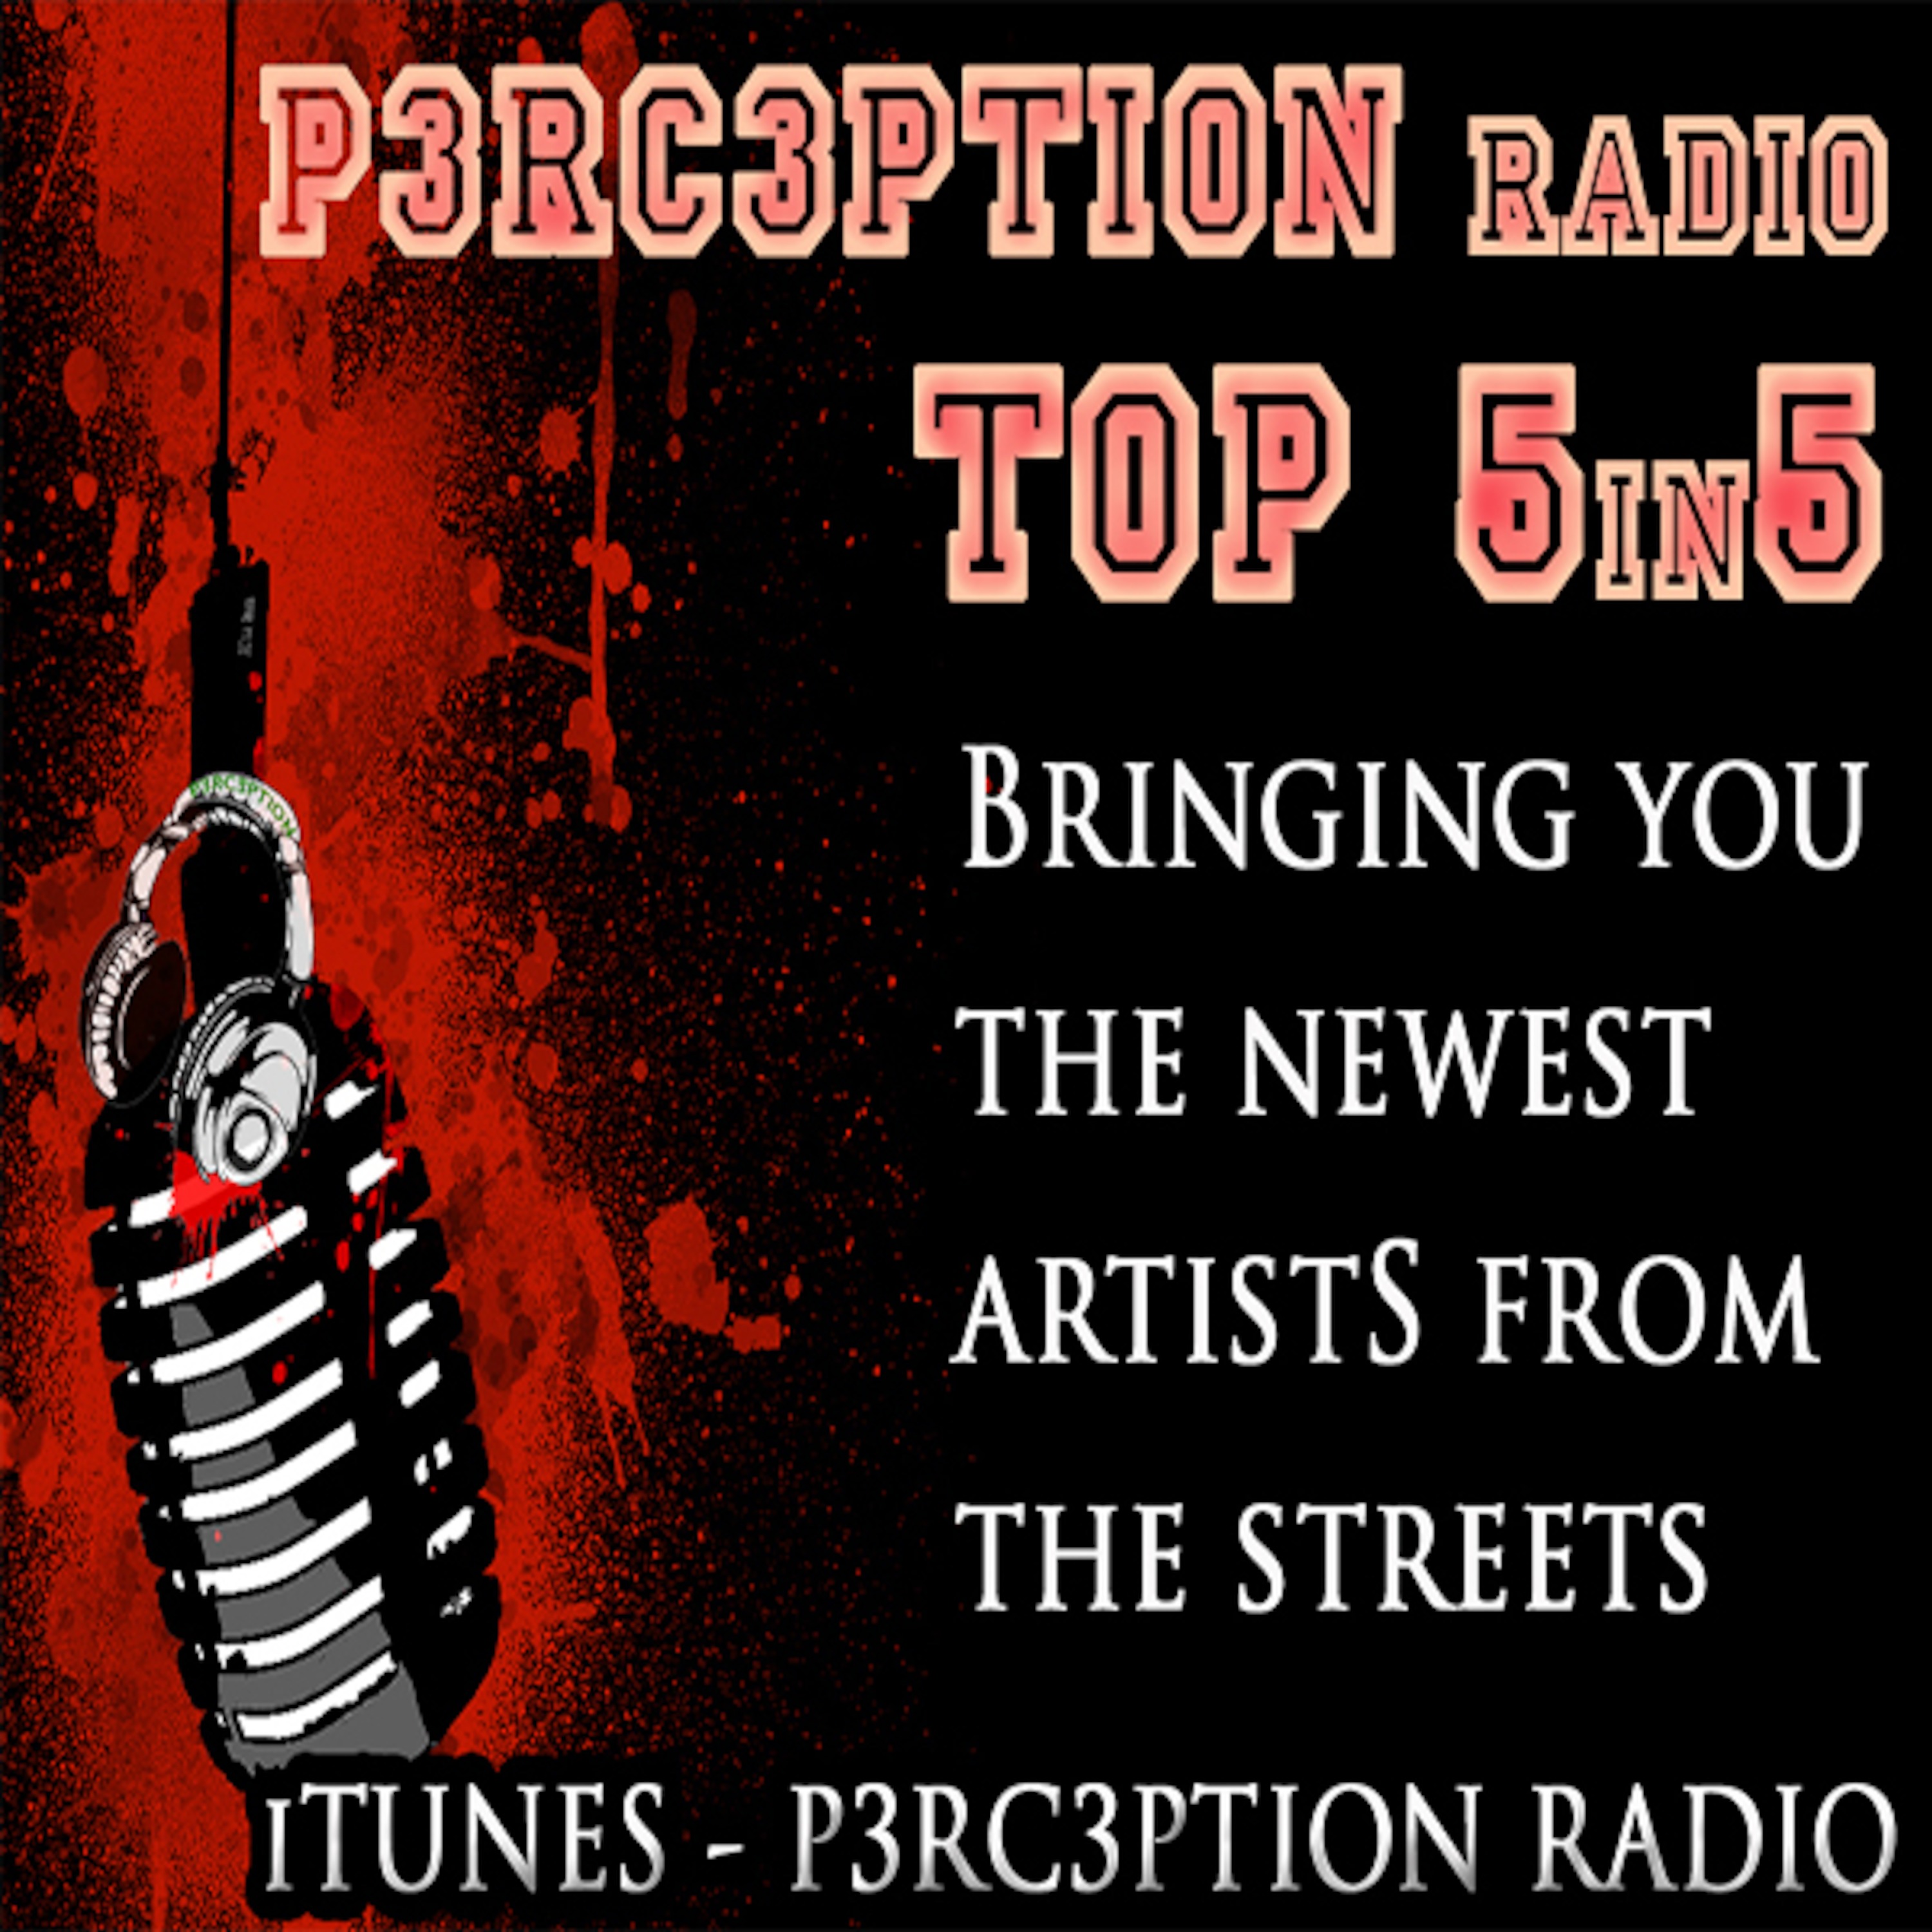 P3RC3PTION Radio